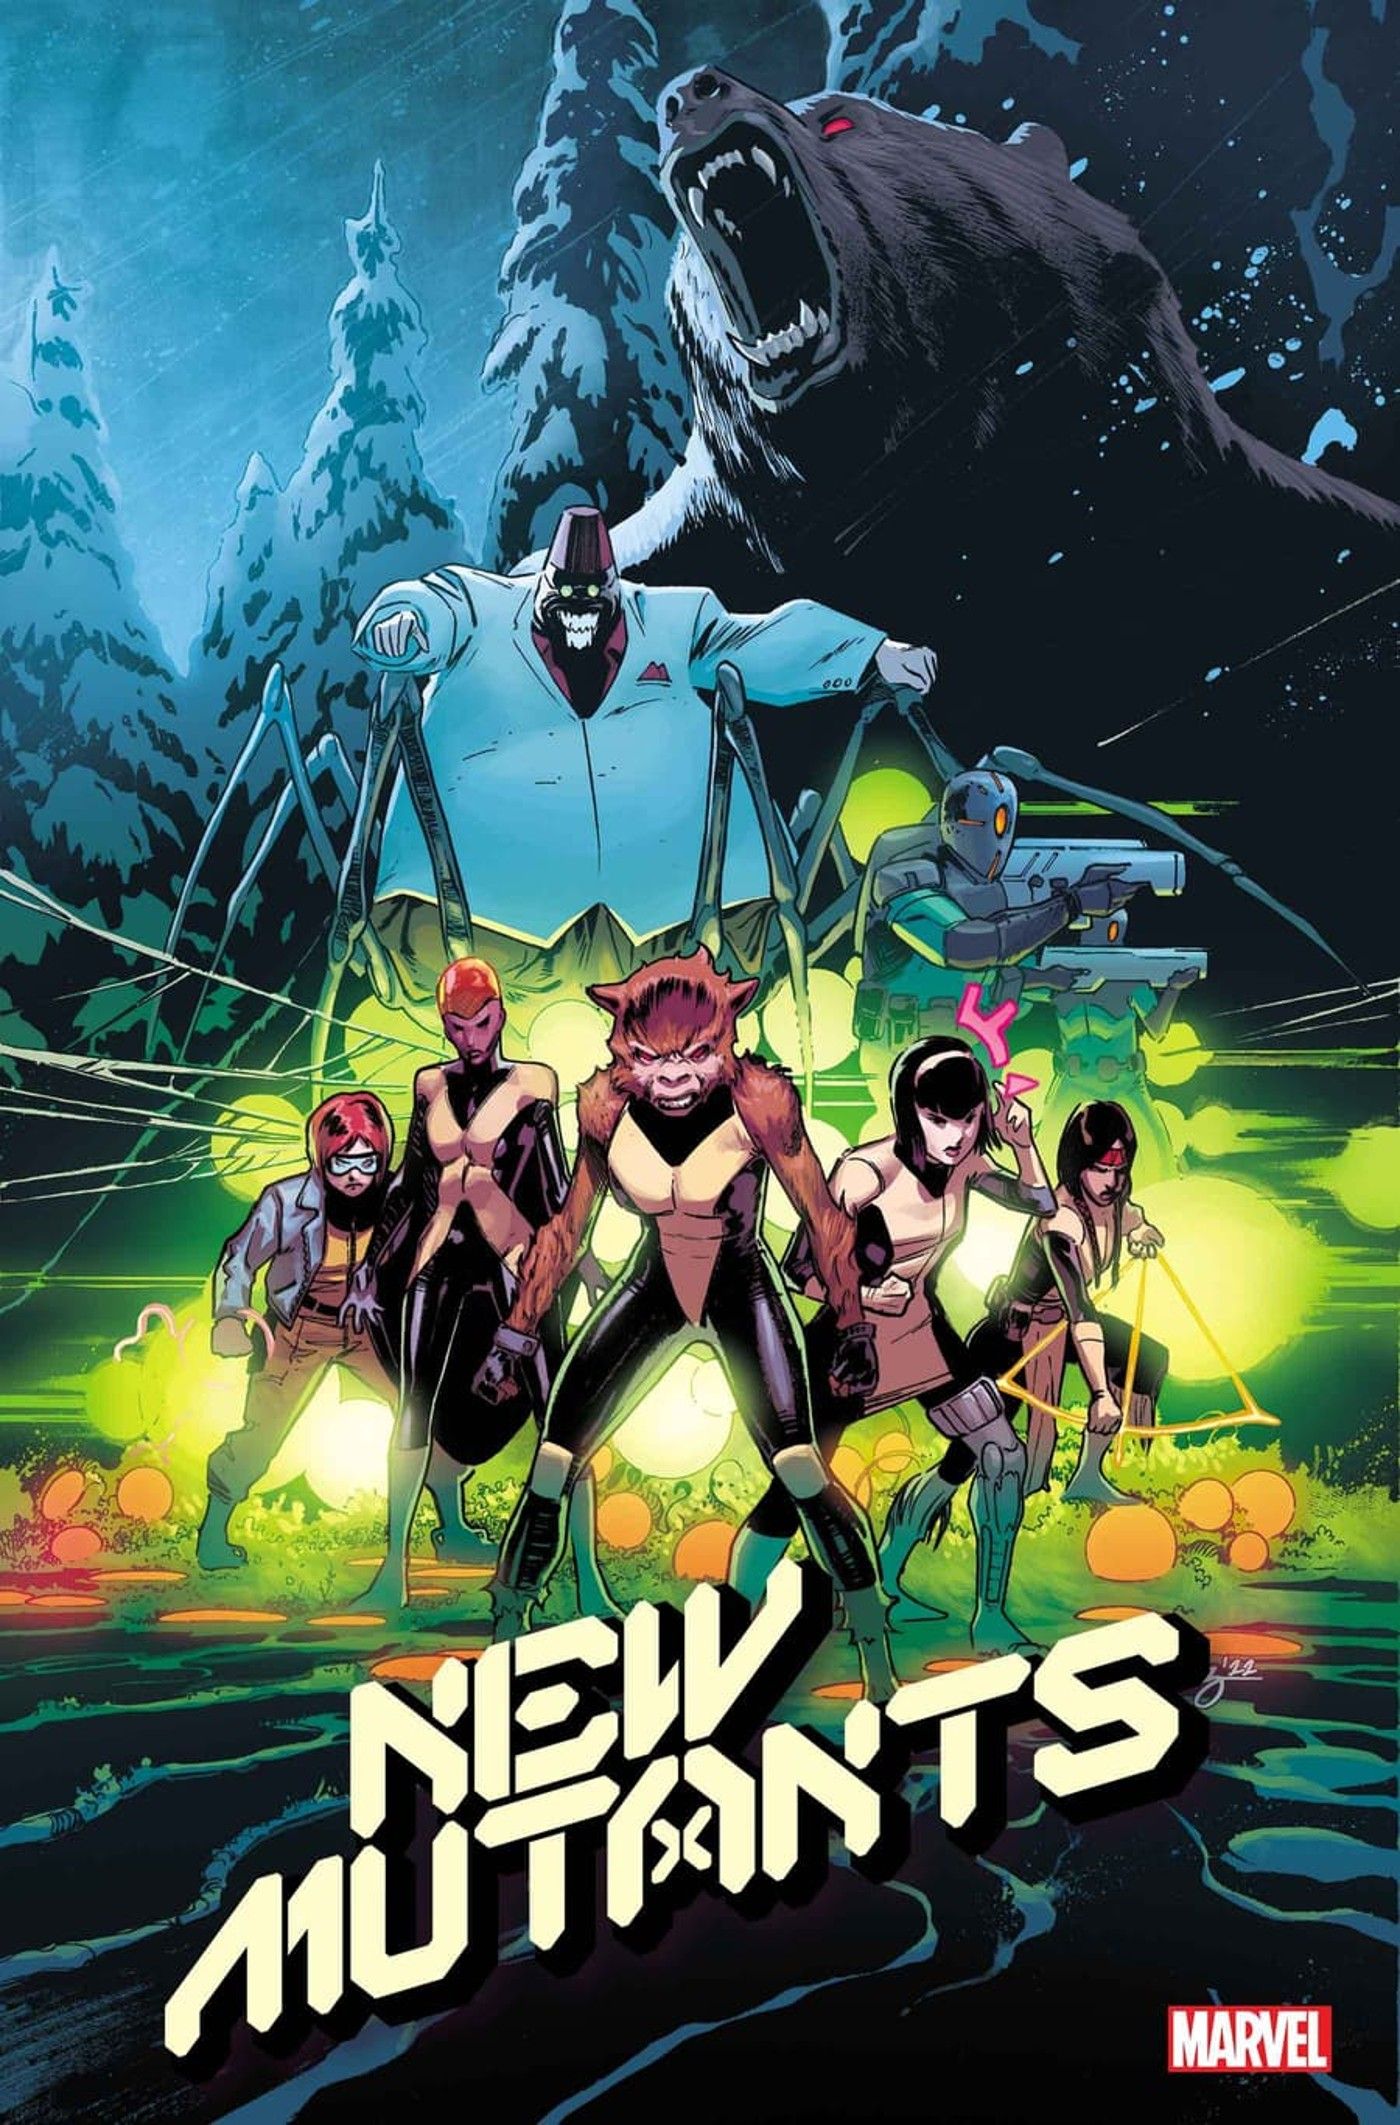 Cover for New Mutants Lethal Legion #1 featuring Escapade, Cerebella, Wolfsbane, ,Karma, and Dani Moonstar